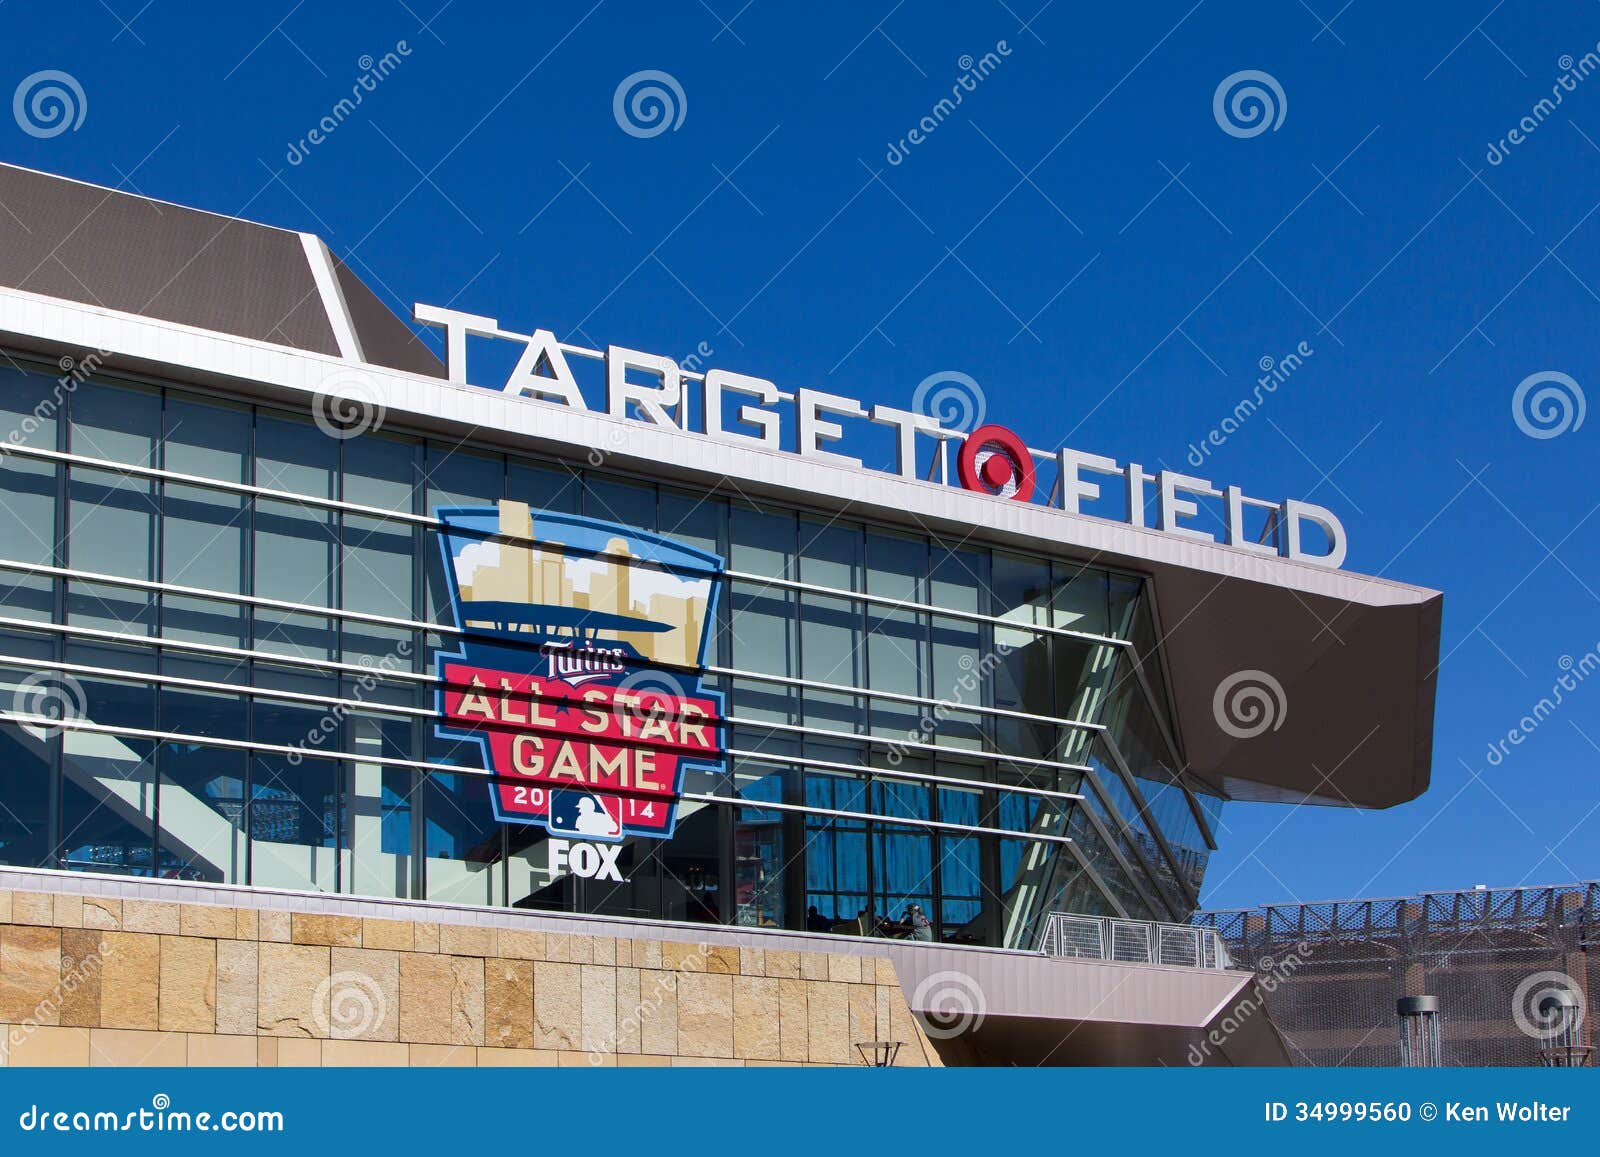 Target Center Stadium In Downtown Minneapolis Minnesota Stock Photo -  Download Image Now - iStock